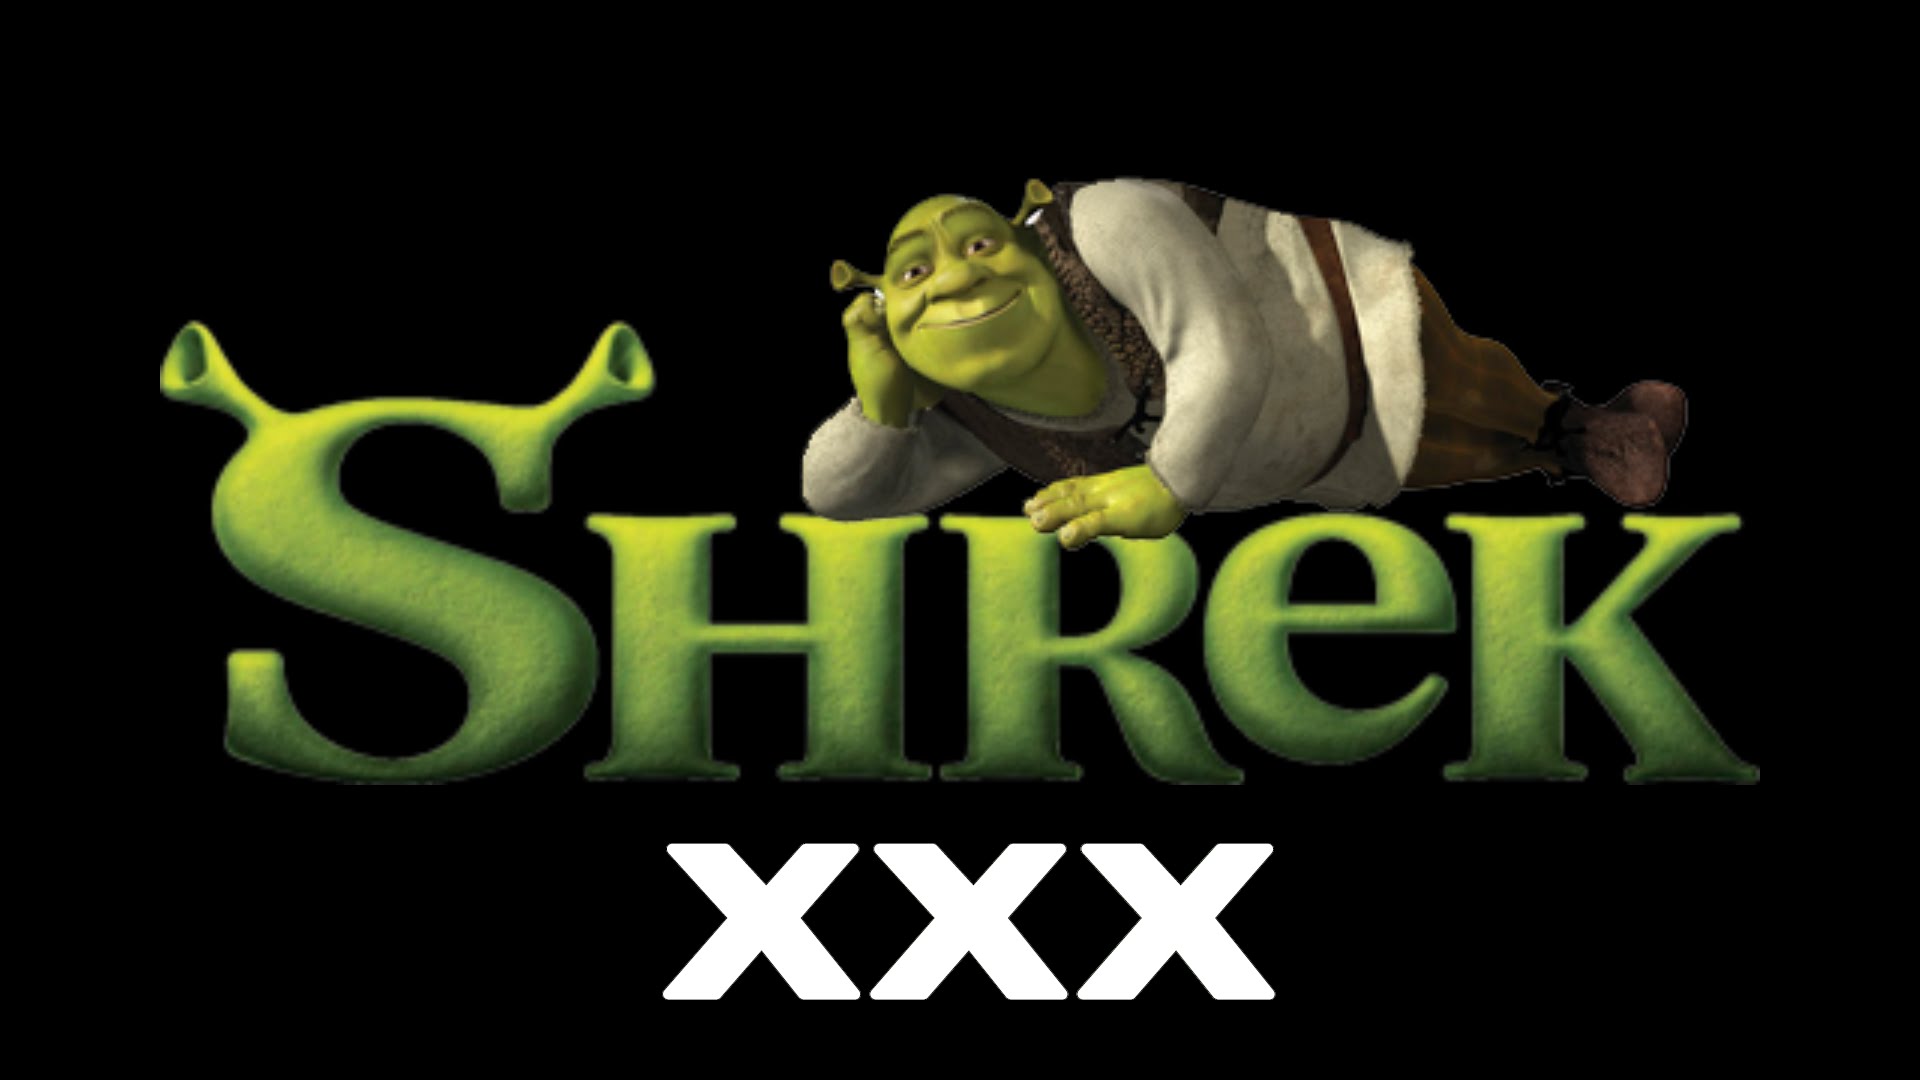 best of Shrek the movie entire